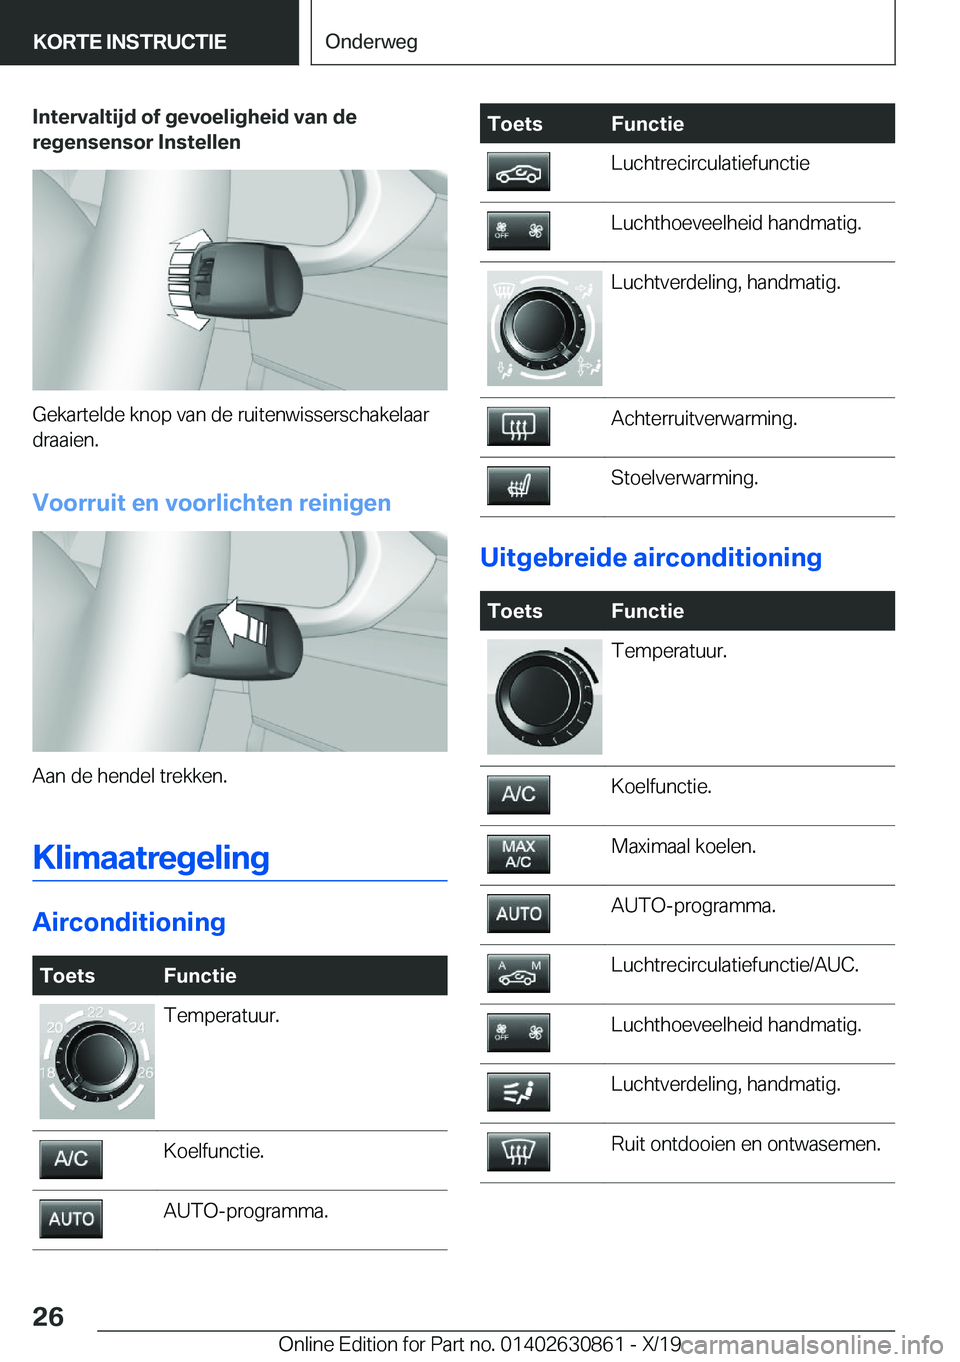 BMW 4 SERIES GRAN COUPE 2020  Instructieboekjes (in Dutch) �I�n�t�e�r�v�a�l�t�i�j�d��o�f��g�e�v�o�e�l�i�g�h�e�i�d��v�a�n��d�e�r�e�g�e�n�s�e�n�s�o�r��I�n�s�t�e�l�l�e�n
�G�e�k�a�r�t�e�l�d�e��k�n�o�p��v�a�n��d�e��r�u�i�t�e�n�w�i�s�s�e�r�s�c�h�a�k�e�l�a�